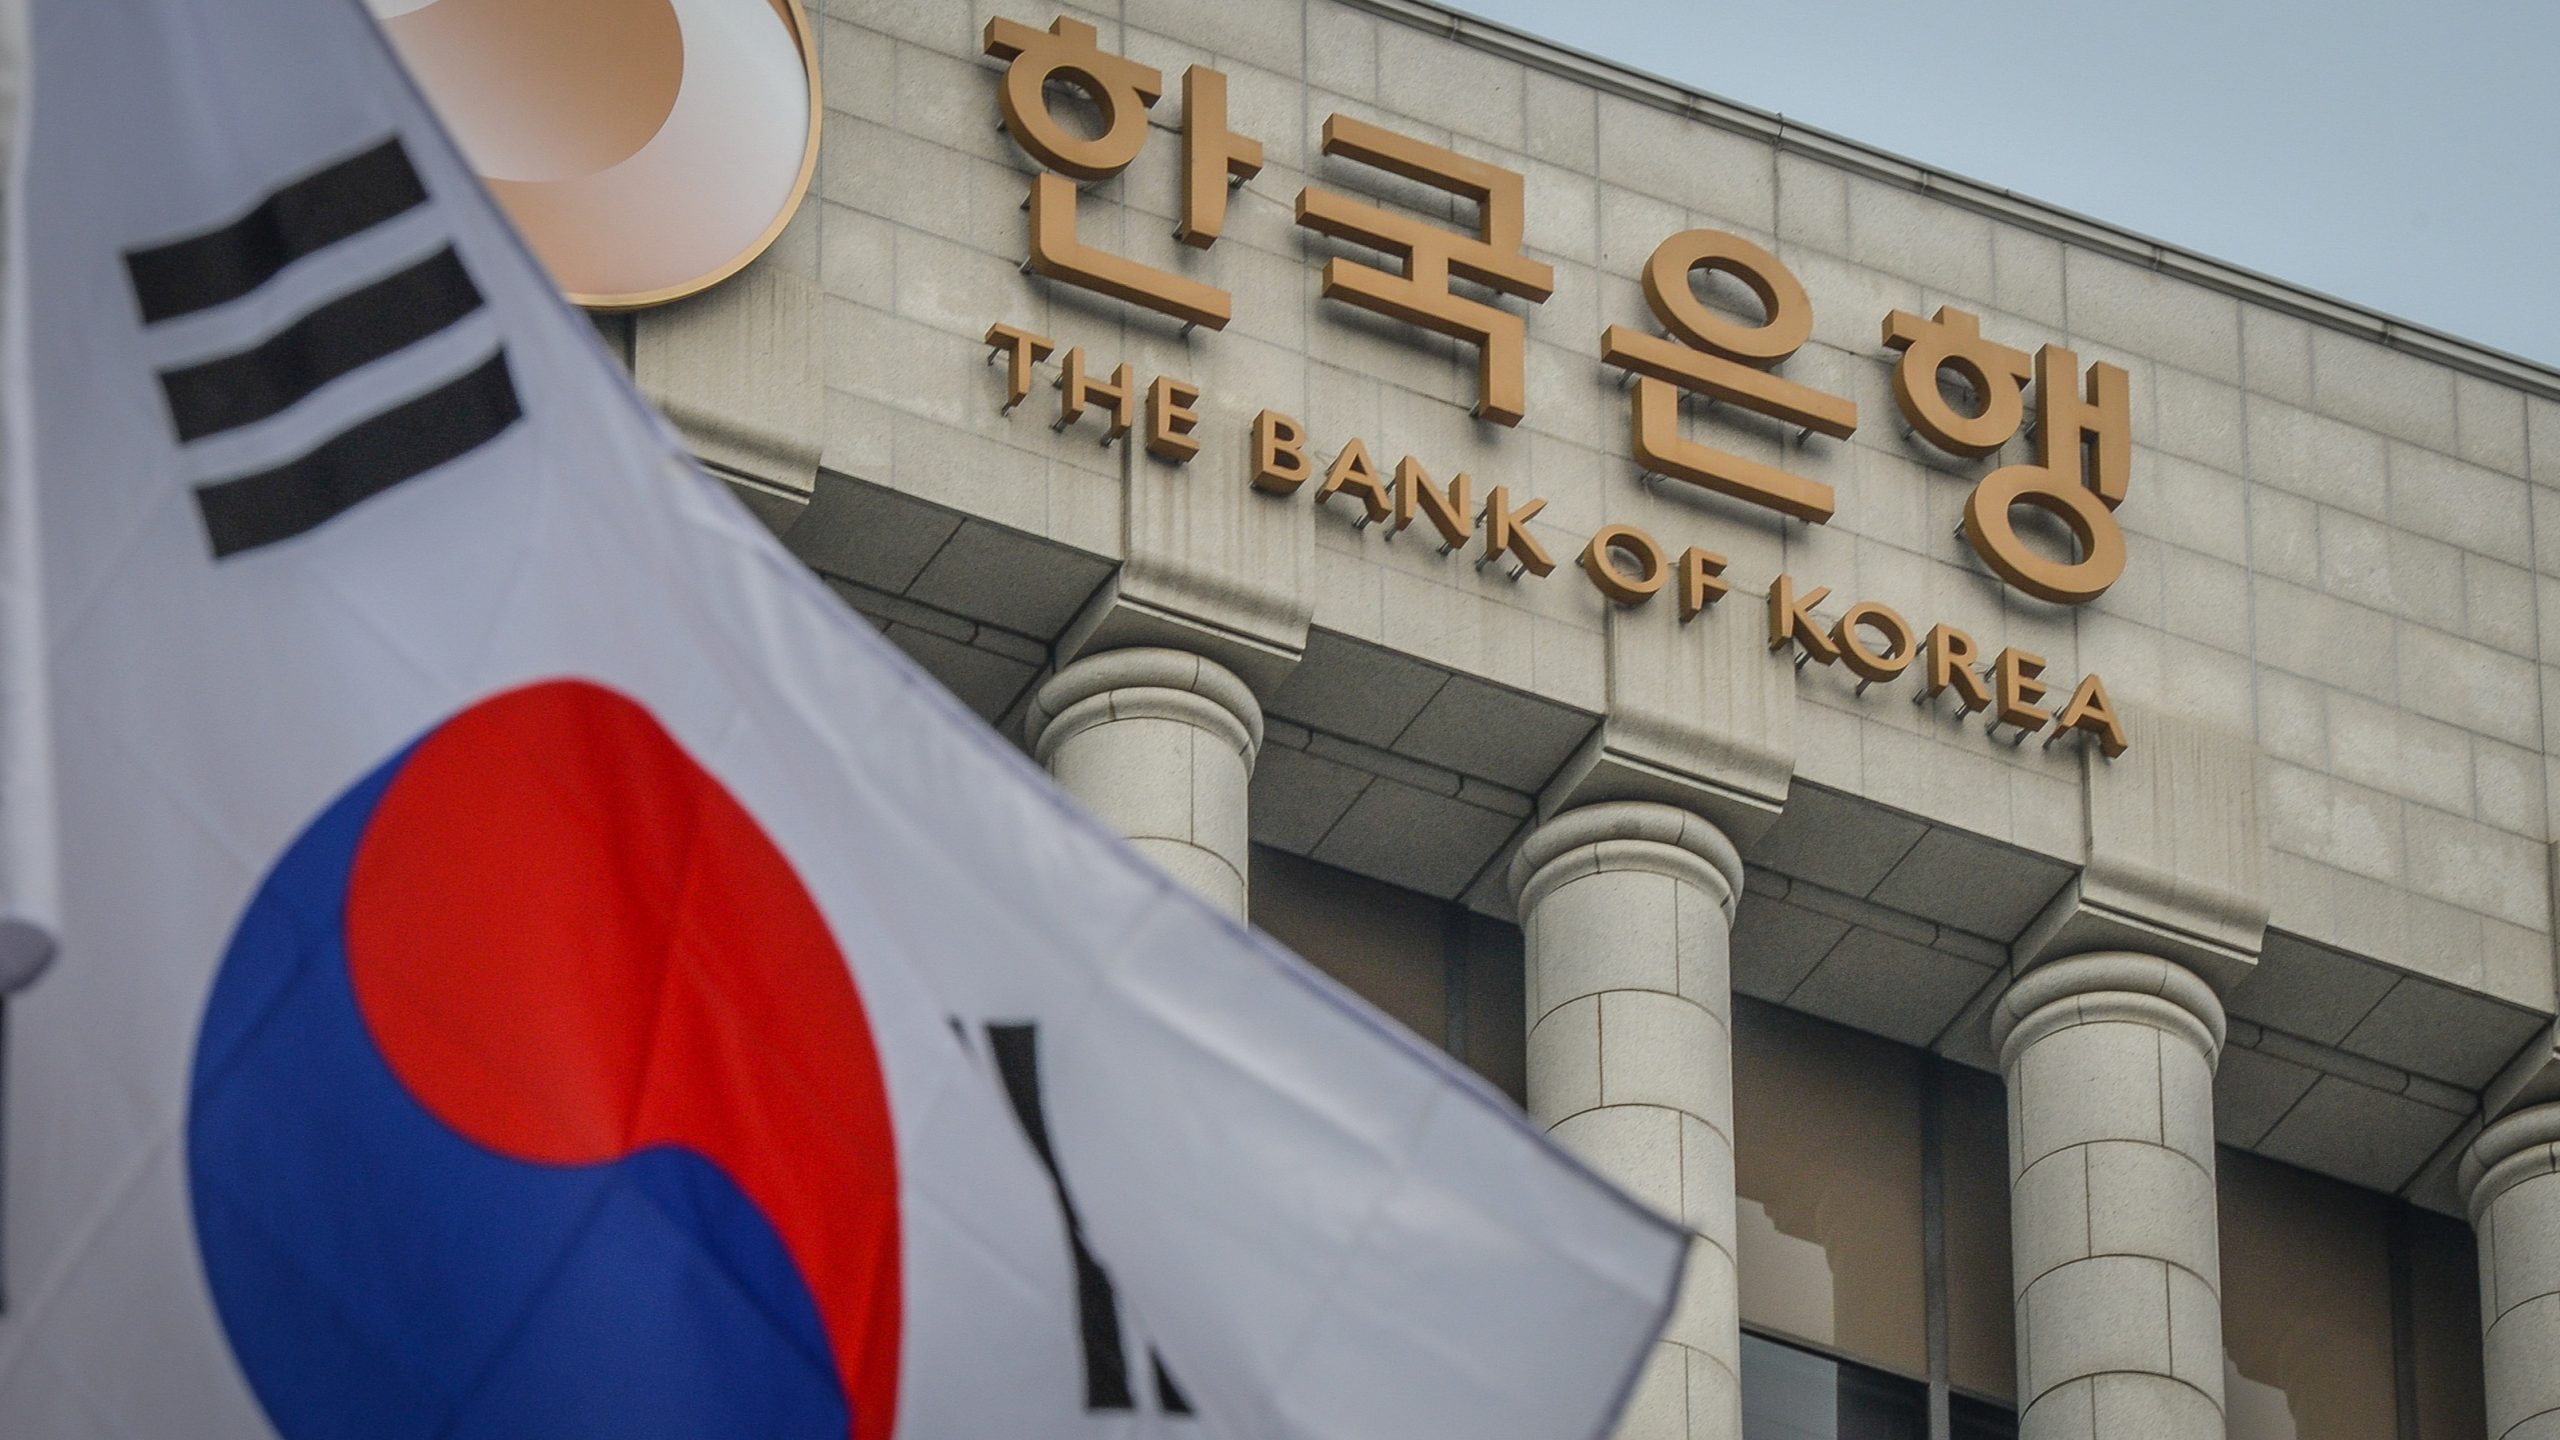 Bank of Korea يوصي باللوائح المالية القديمة لسوق العملات المشفرة